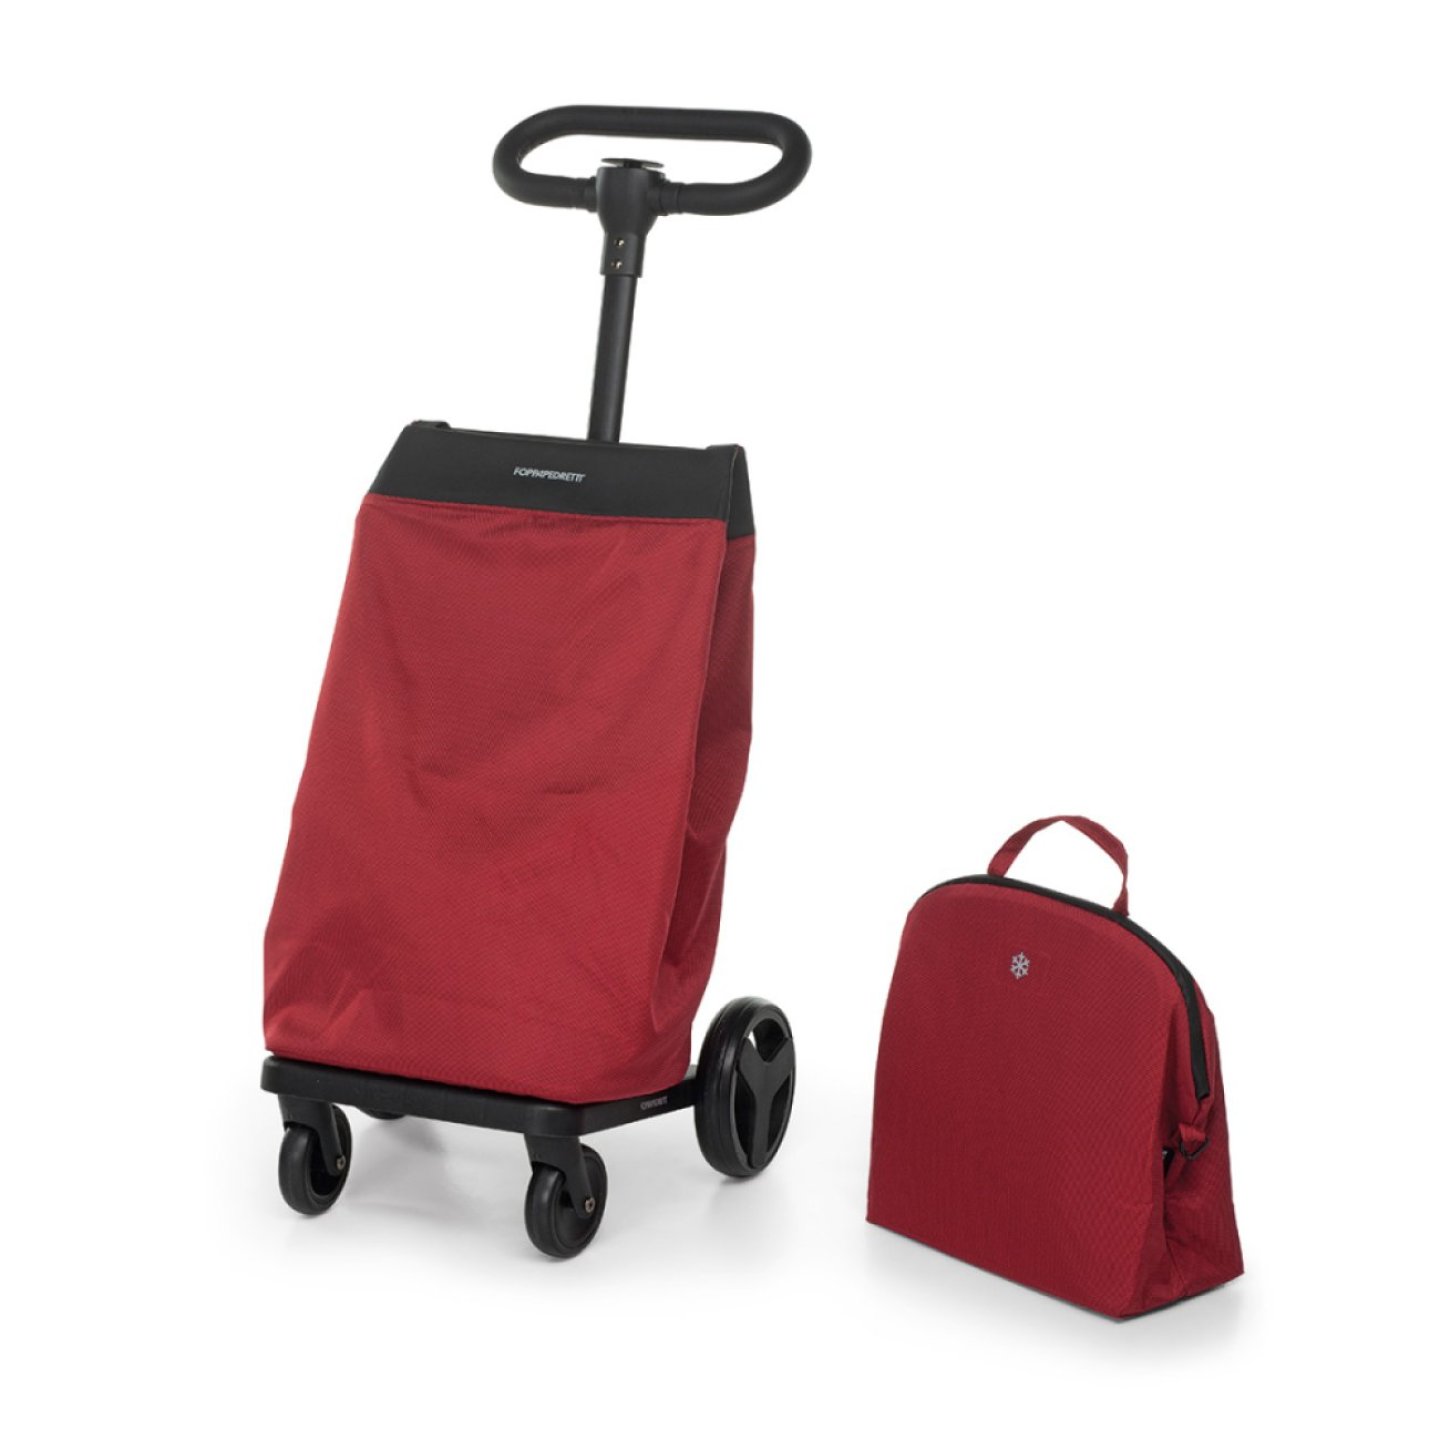 Сумка-візок з колесиками для покупок господарська (кравчучка, трансформер, на колесах, складена) Go Go Red Foppapedretti-1